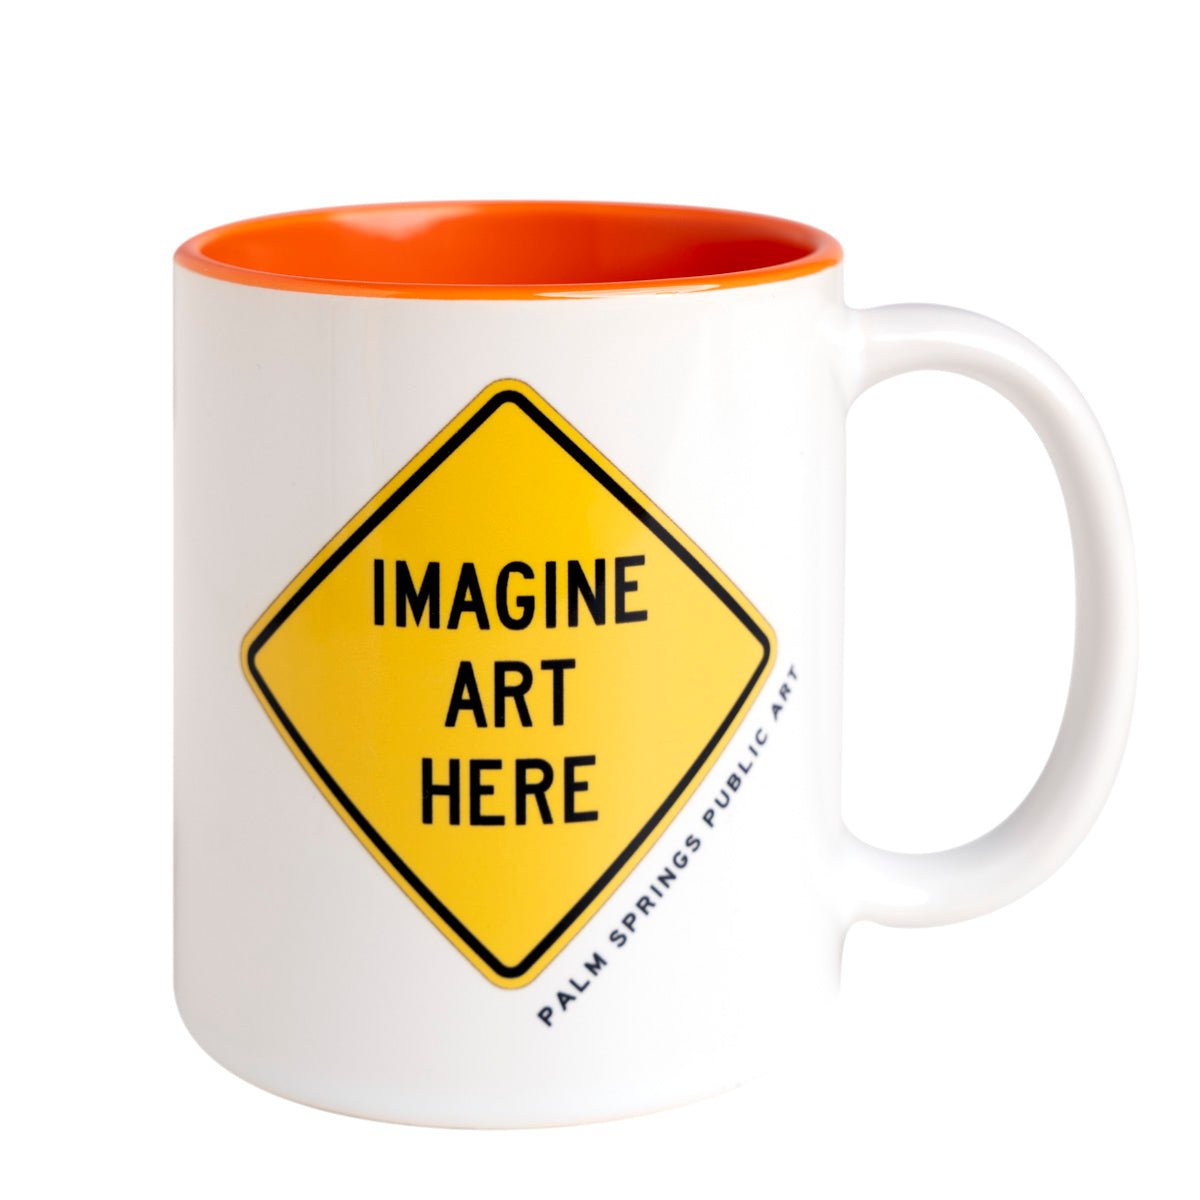 Imagine Art Here Coffee Mug - Destination PSP